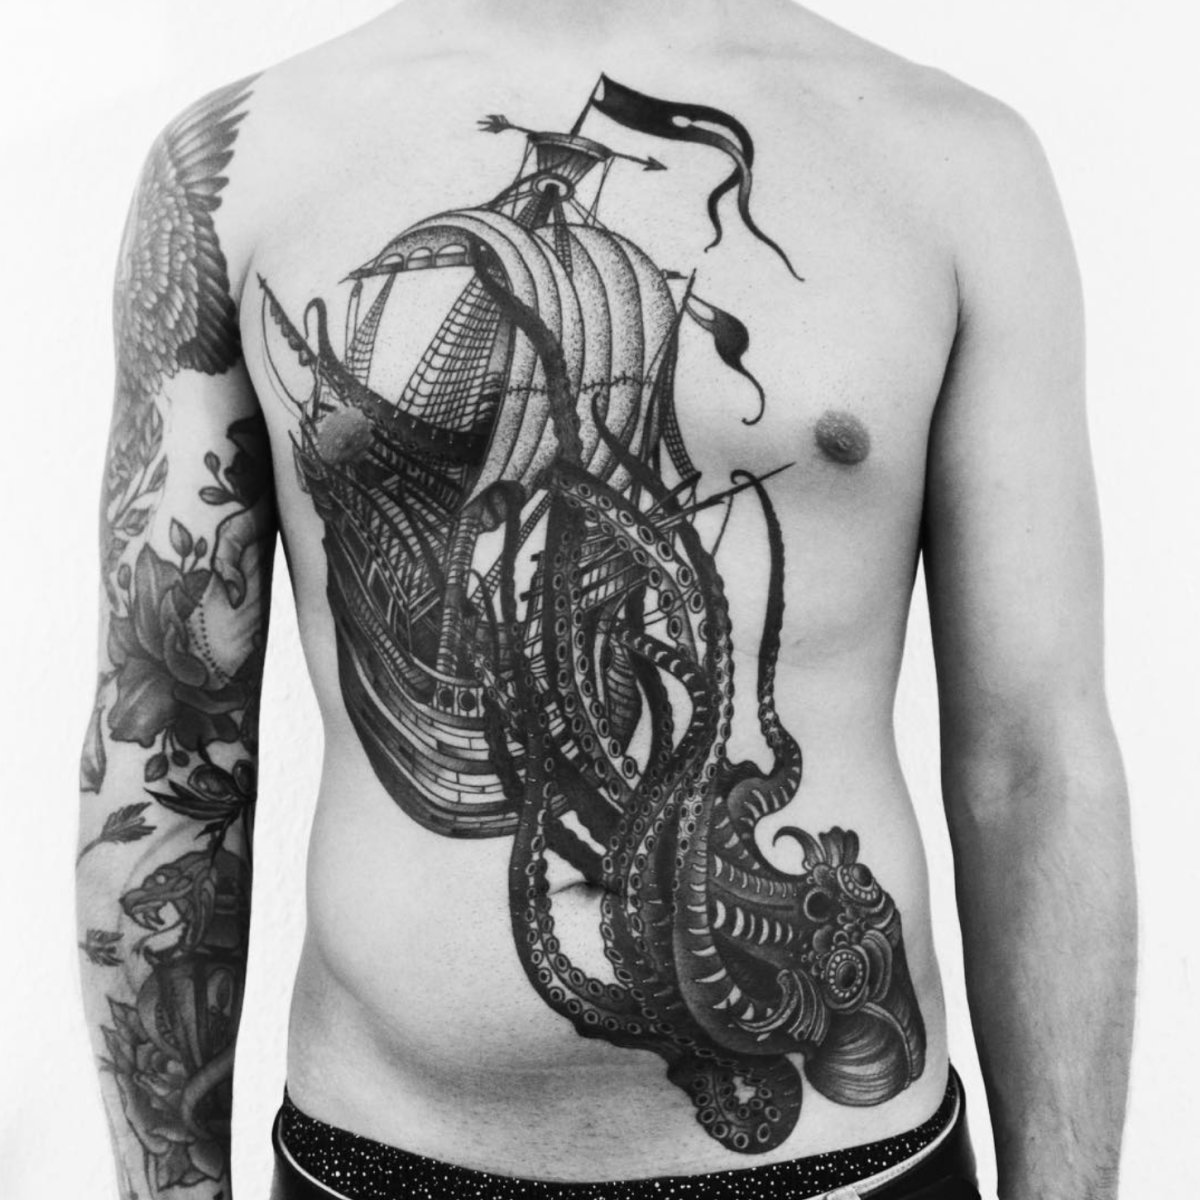 Kraken tetoválás, Oleksandra Riabichko @oleksas.tattoos of München, Germany